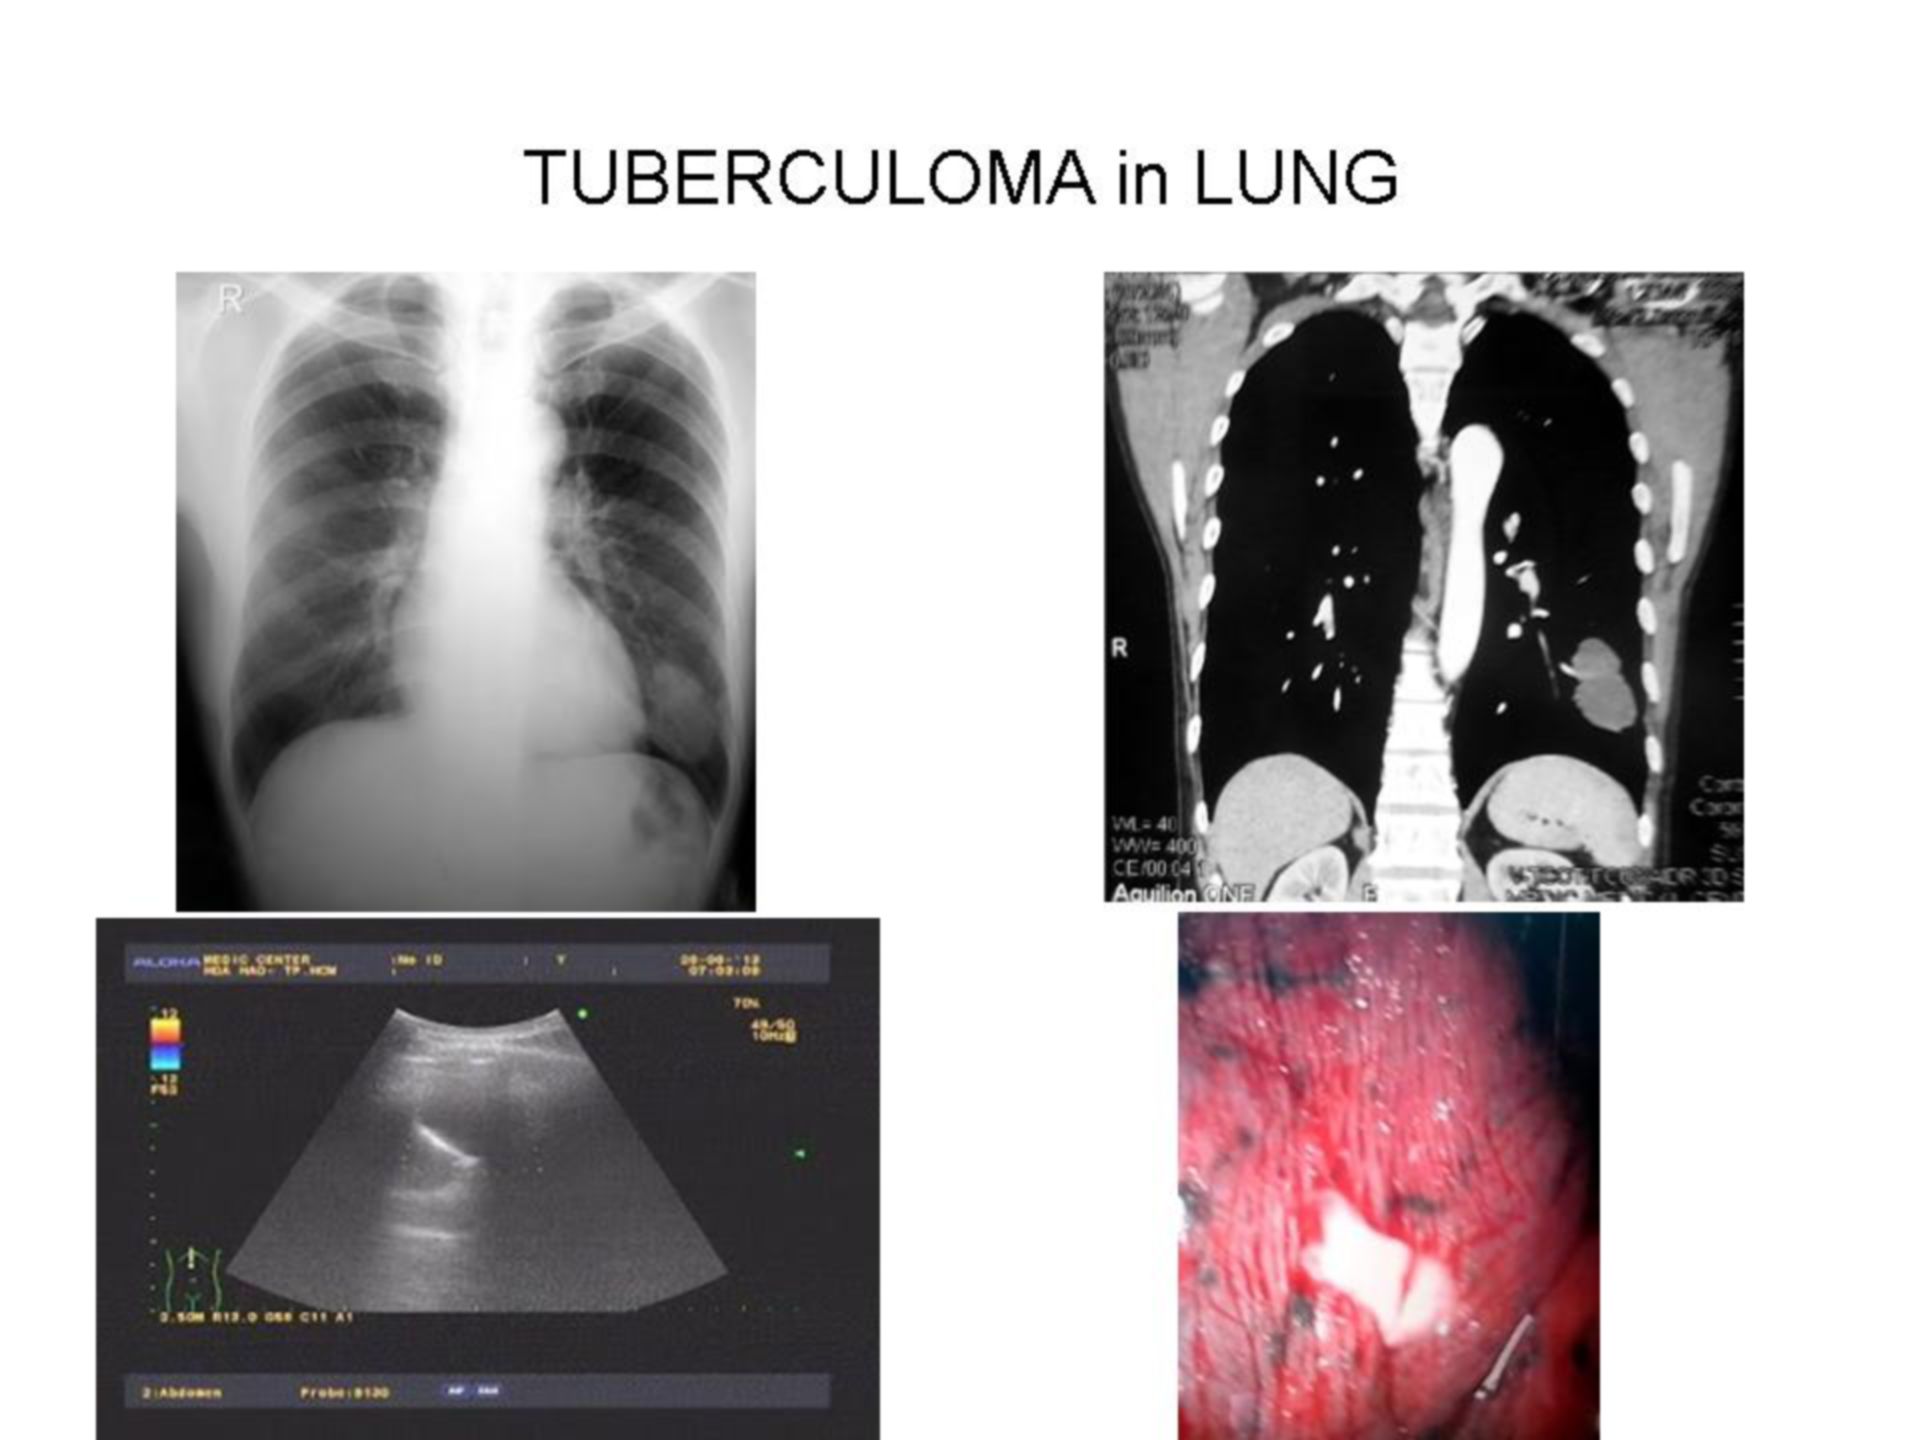 Lung tuberculoma